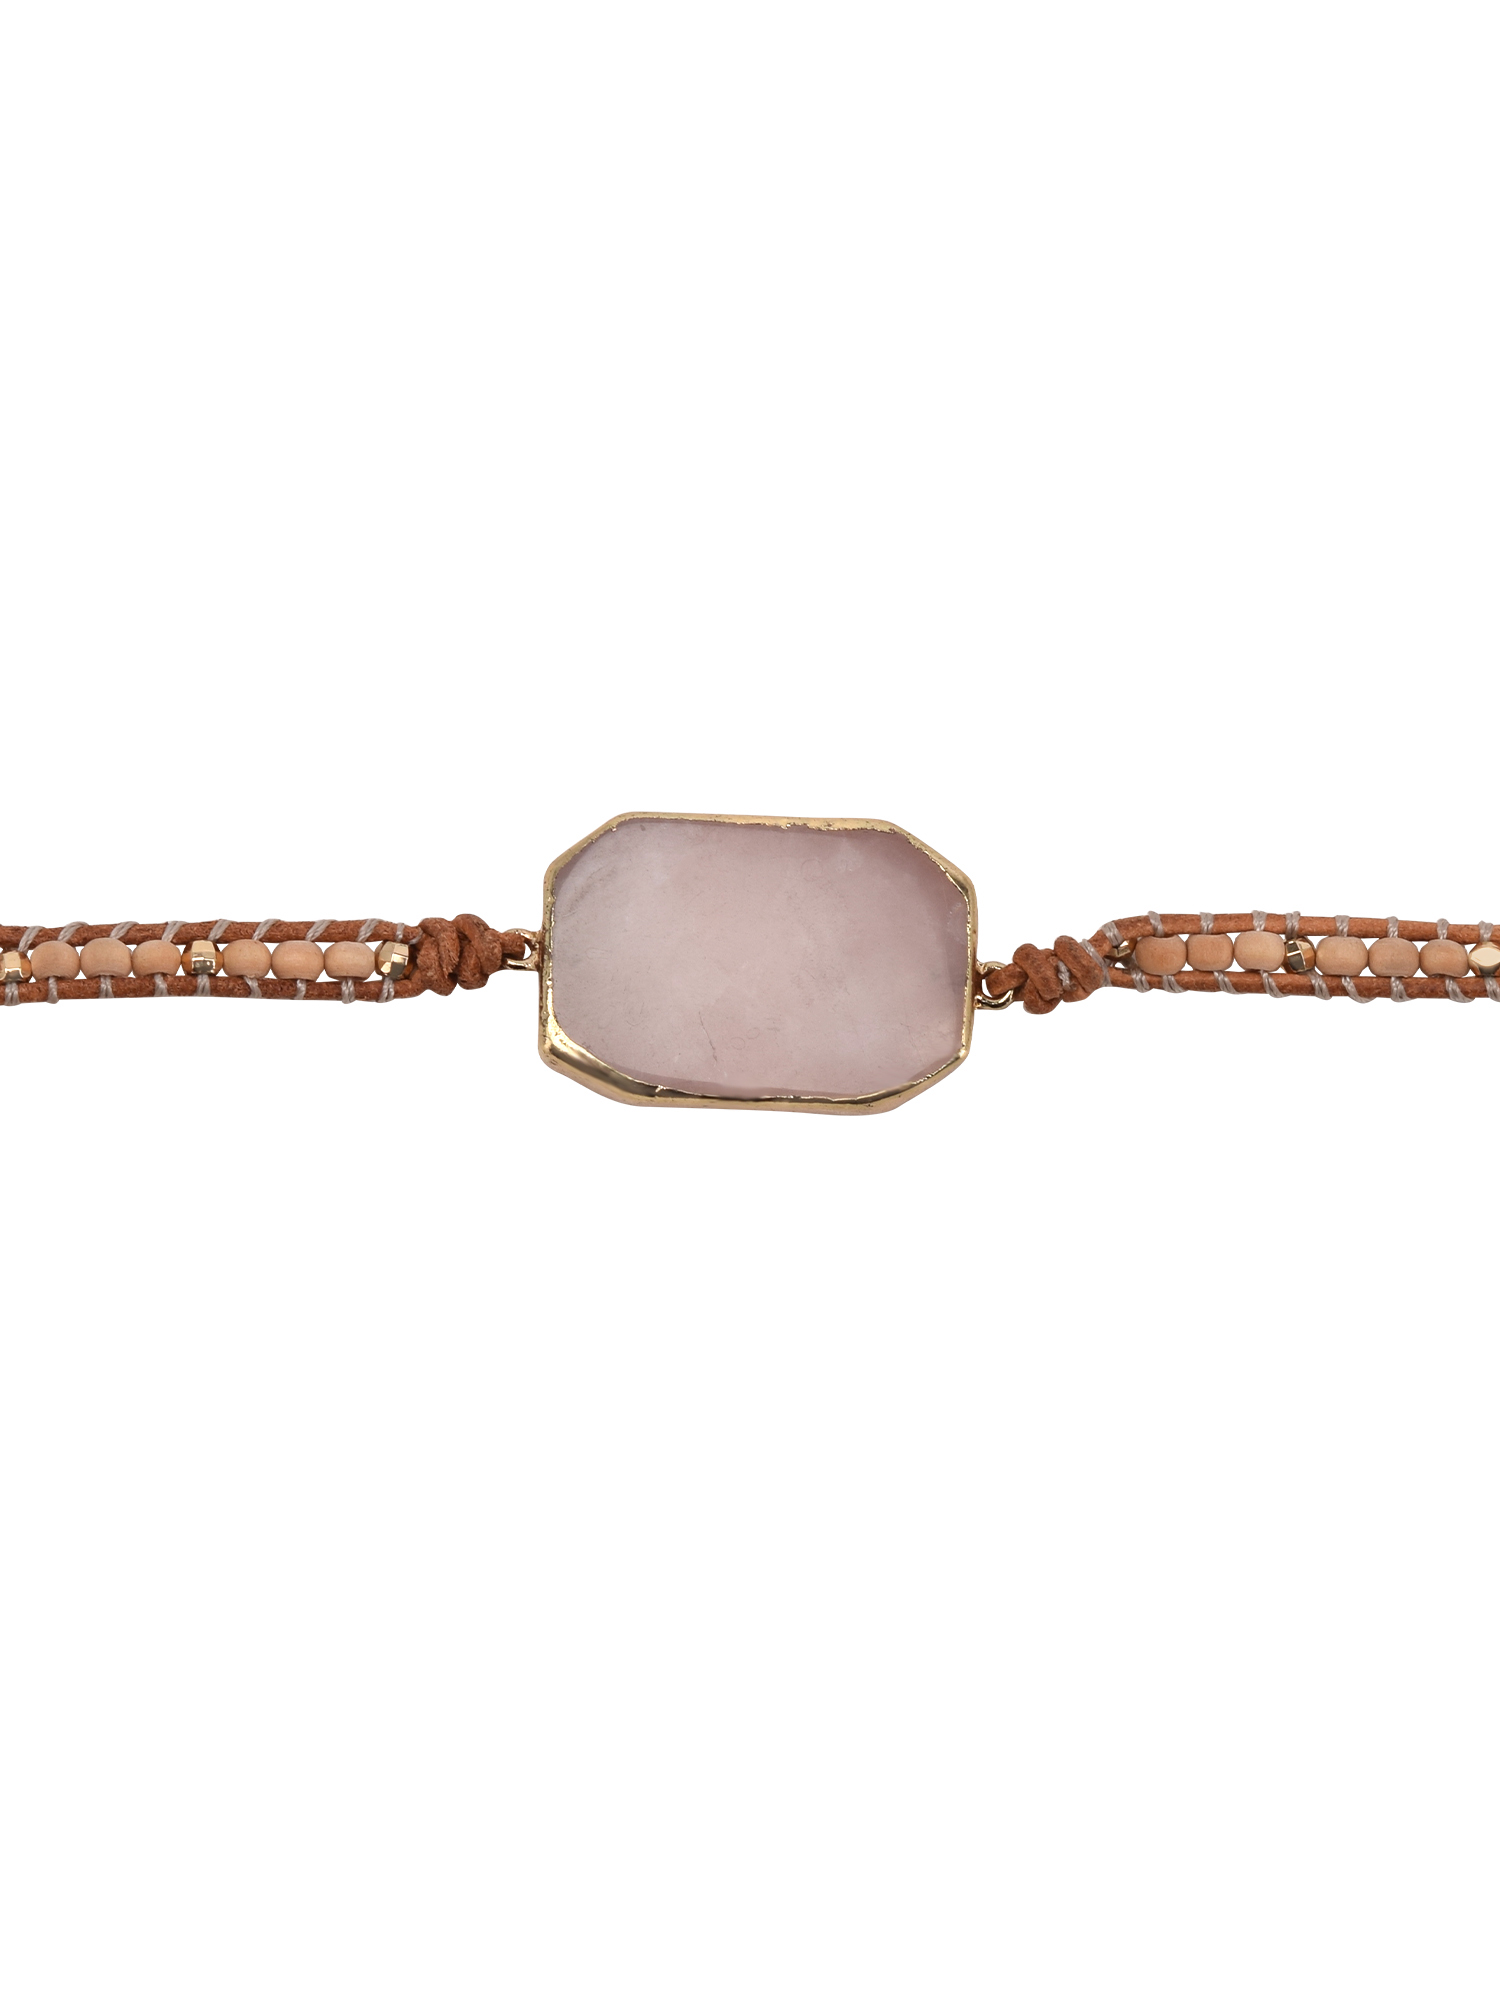 The Pioneer Woman - Women's Jewelry, Semi-Precious Stone Wrap Bracelet - image 3 of 5